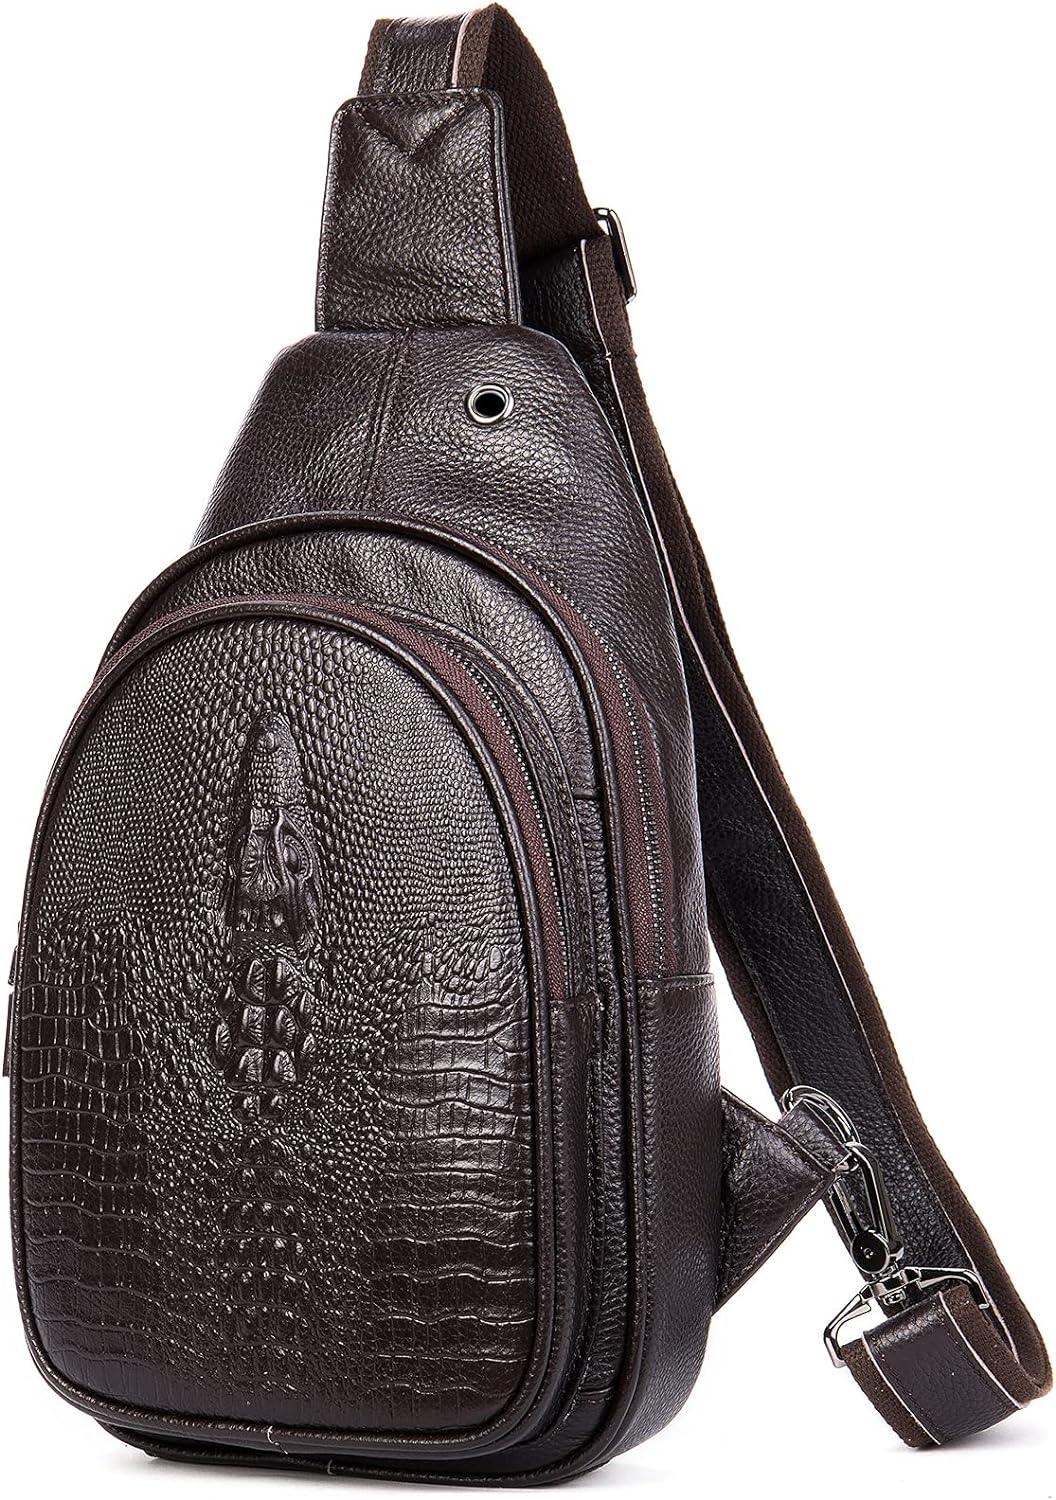 FR Fashion Co. 12" Men's Crocodile Leather Sling Bag - FR Fashion Co. 